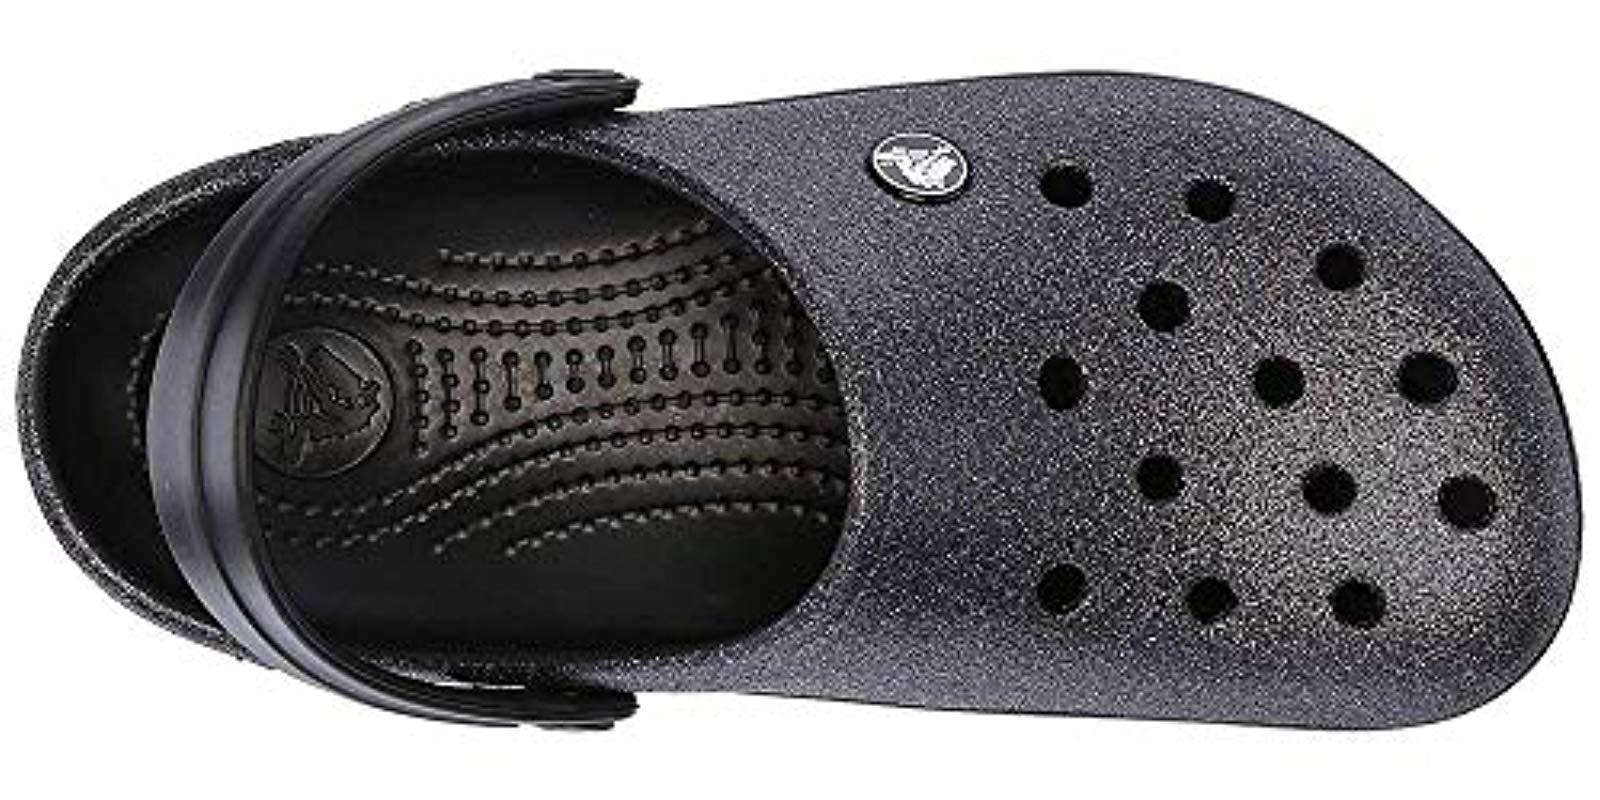 crocs black glitter